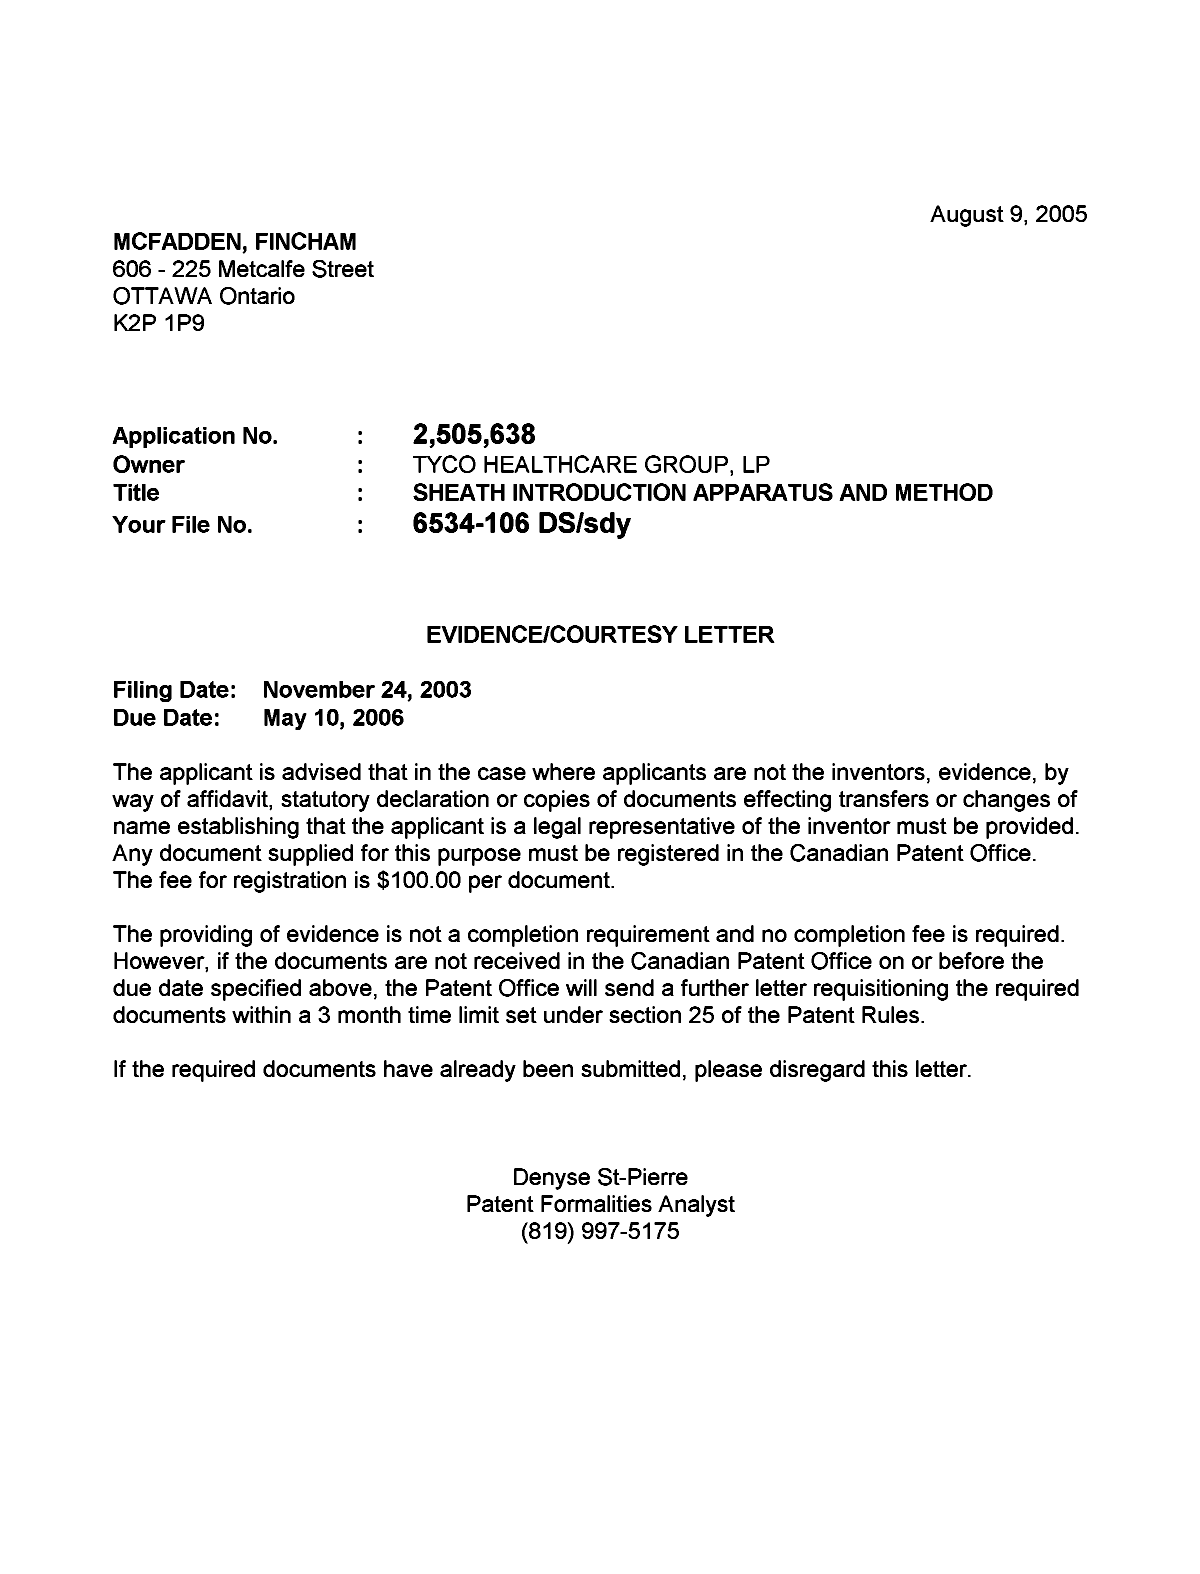 Canadian Patent Document 2505638. Correspondence 20050808. Image 1 of 1